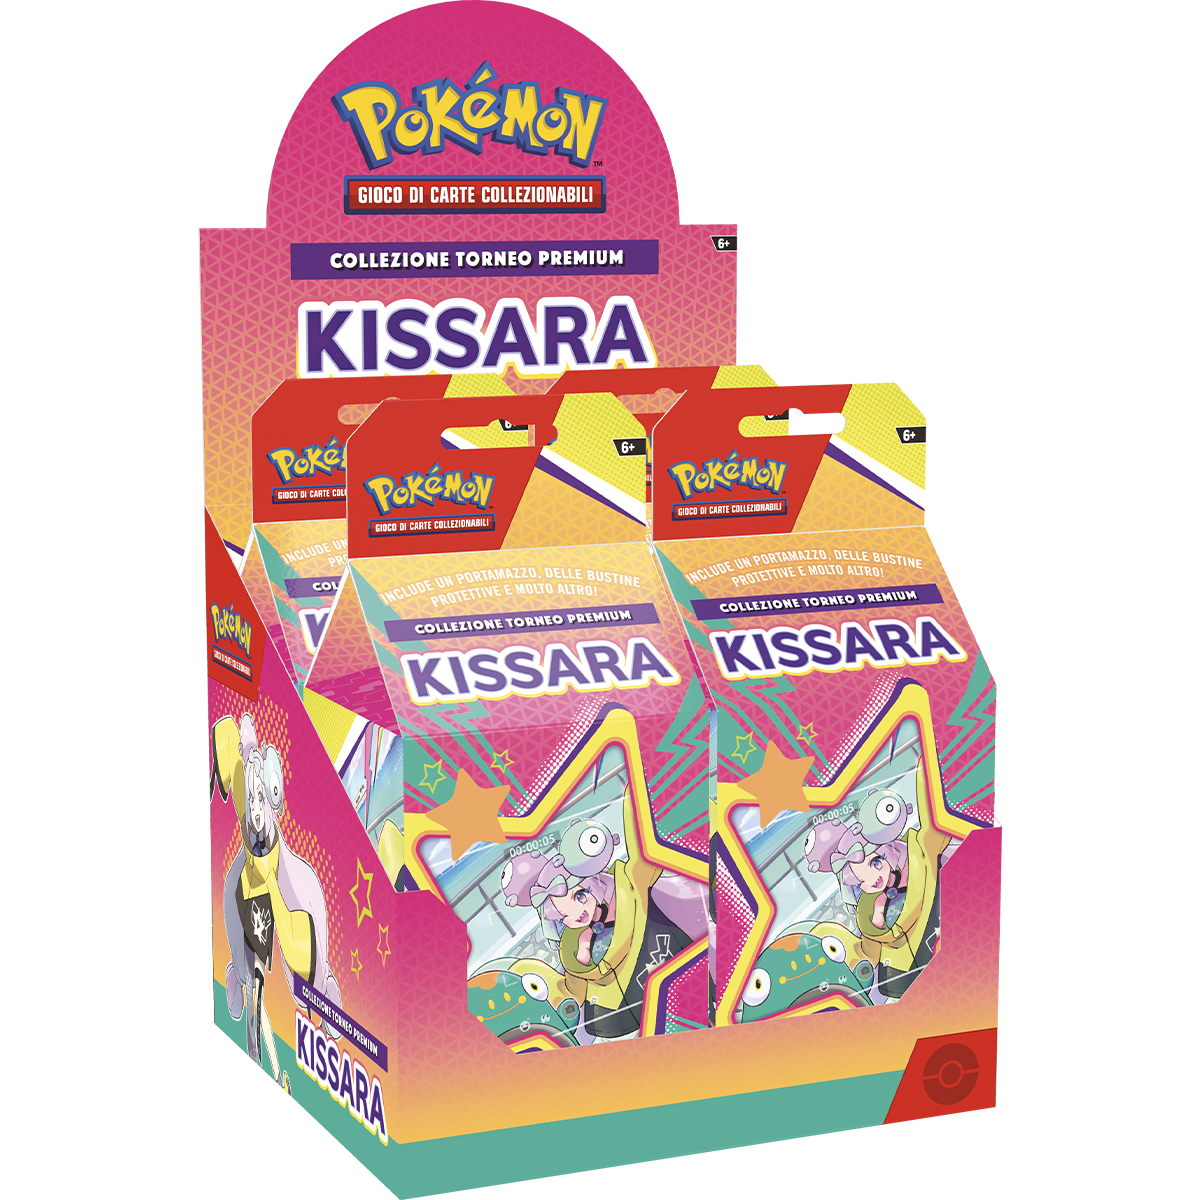 Pokémon Collezione Torneo Premium Kissara - Pokémon